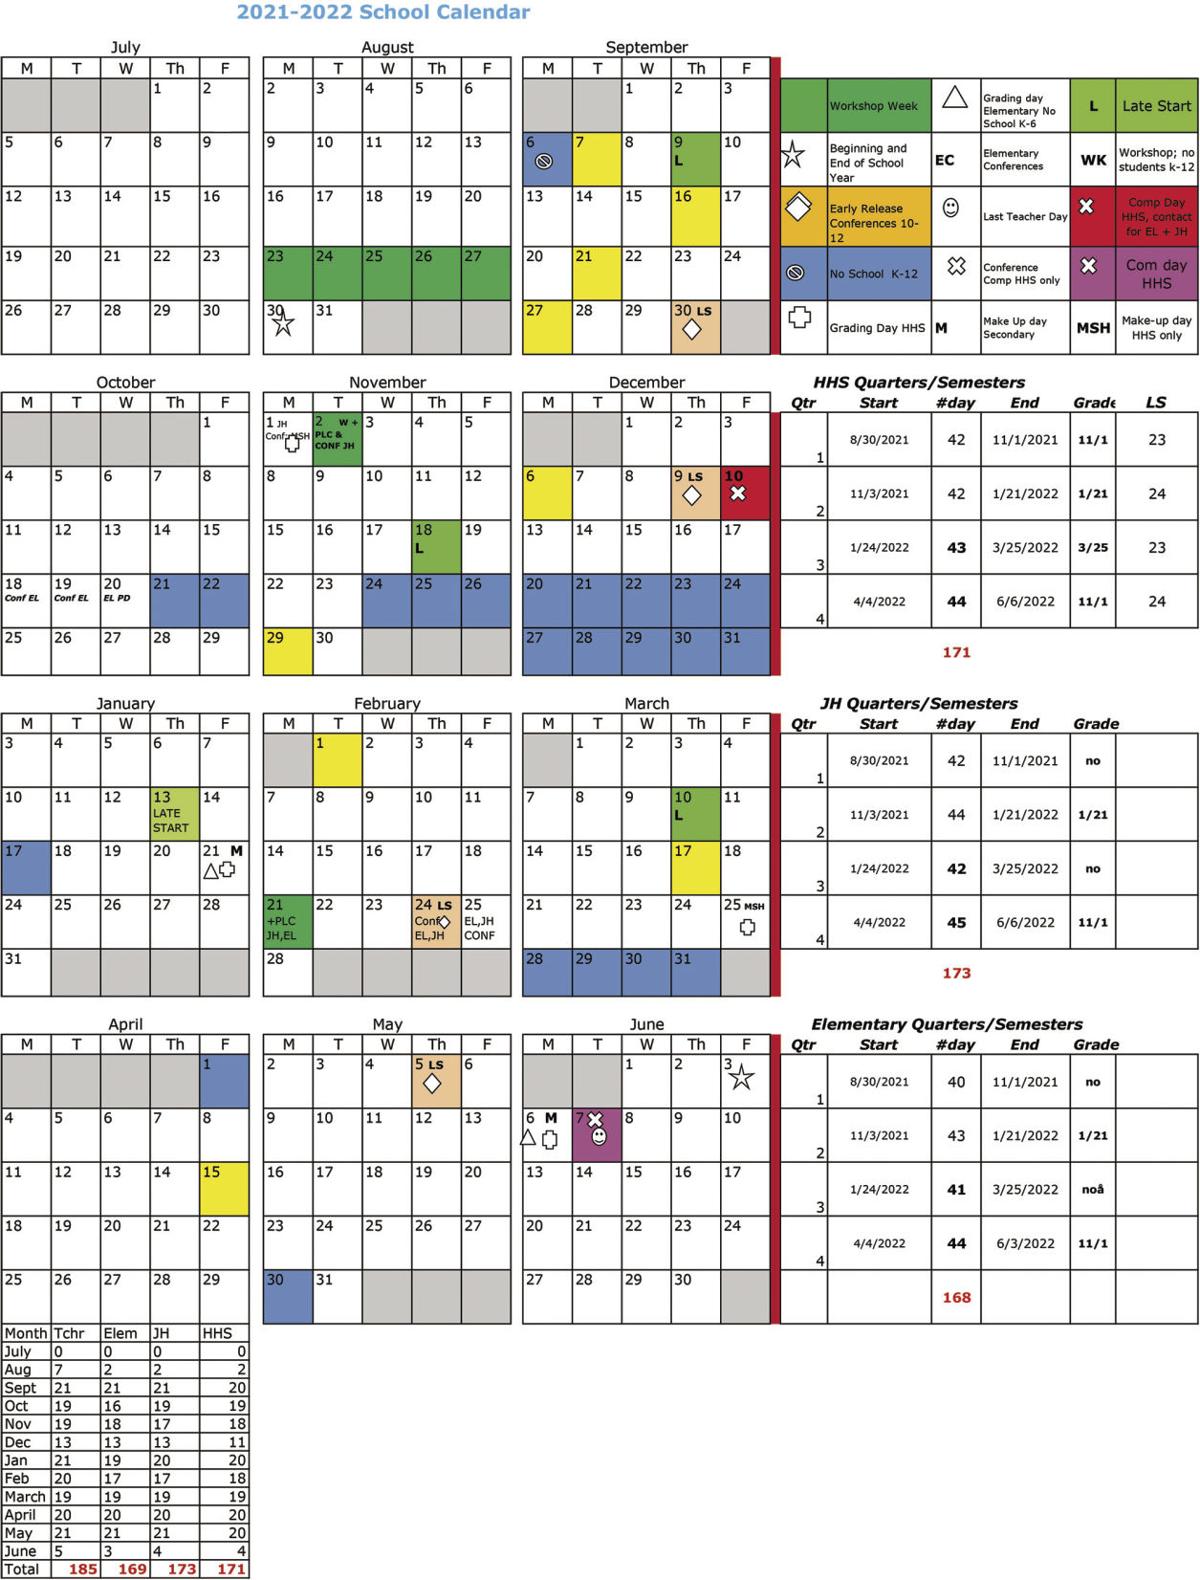 Lake County Schools Calendar 2021 22 Holiday Calendar